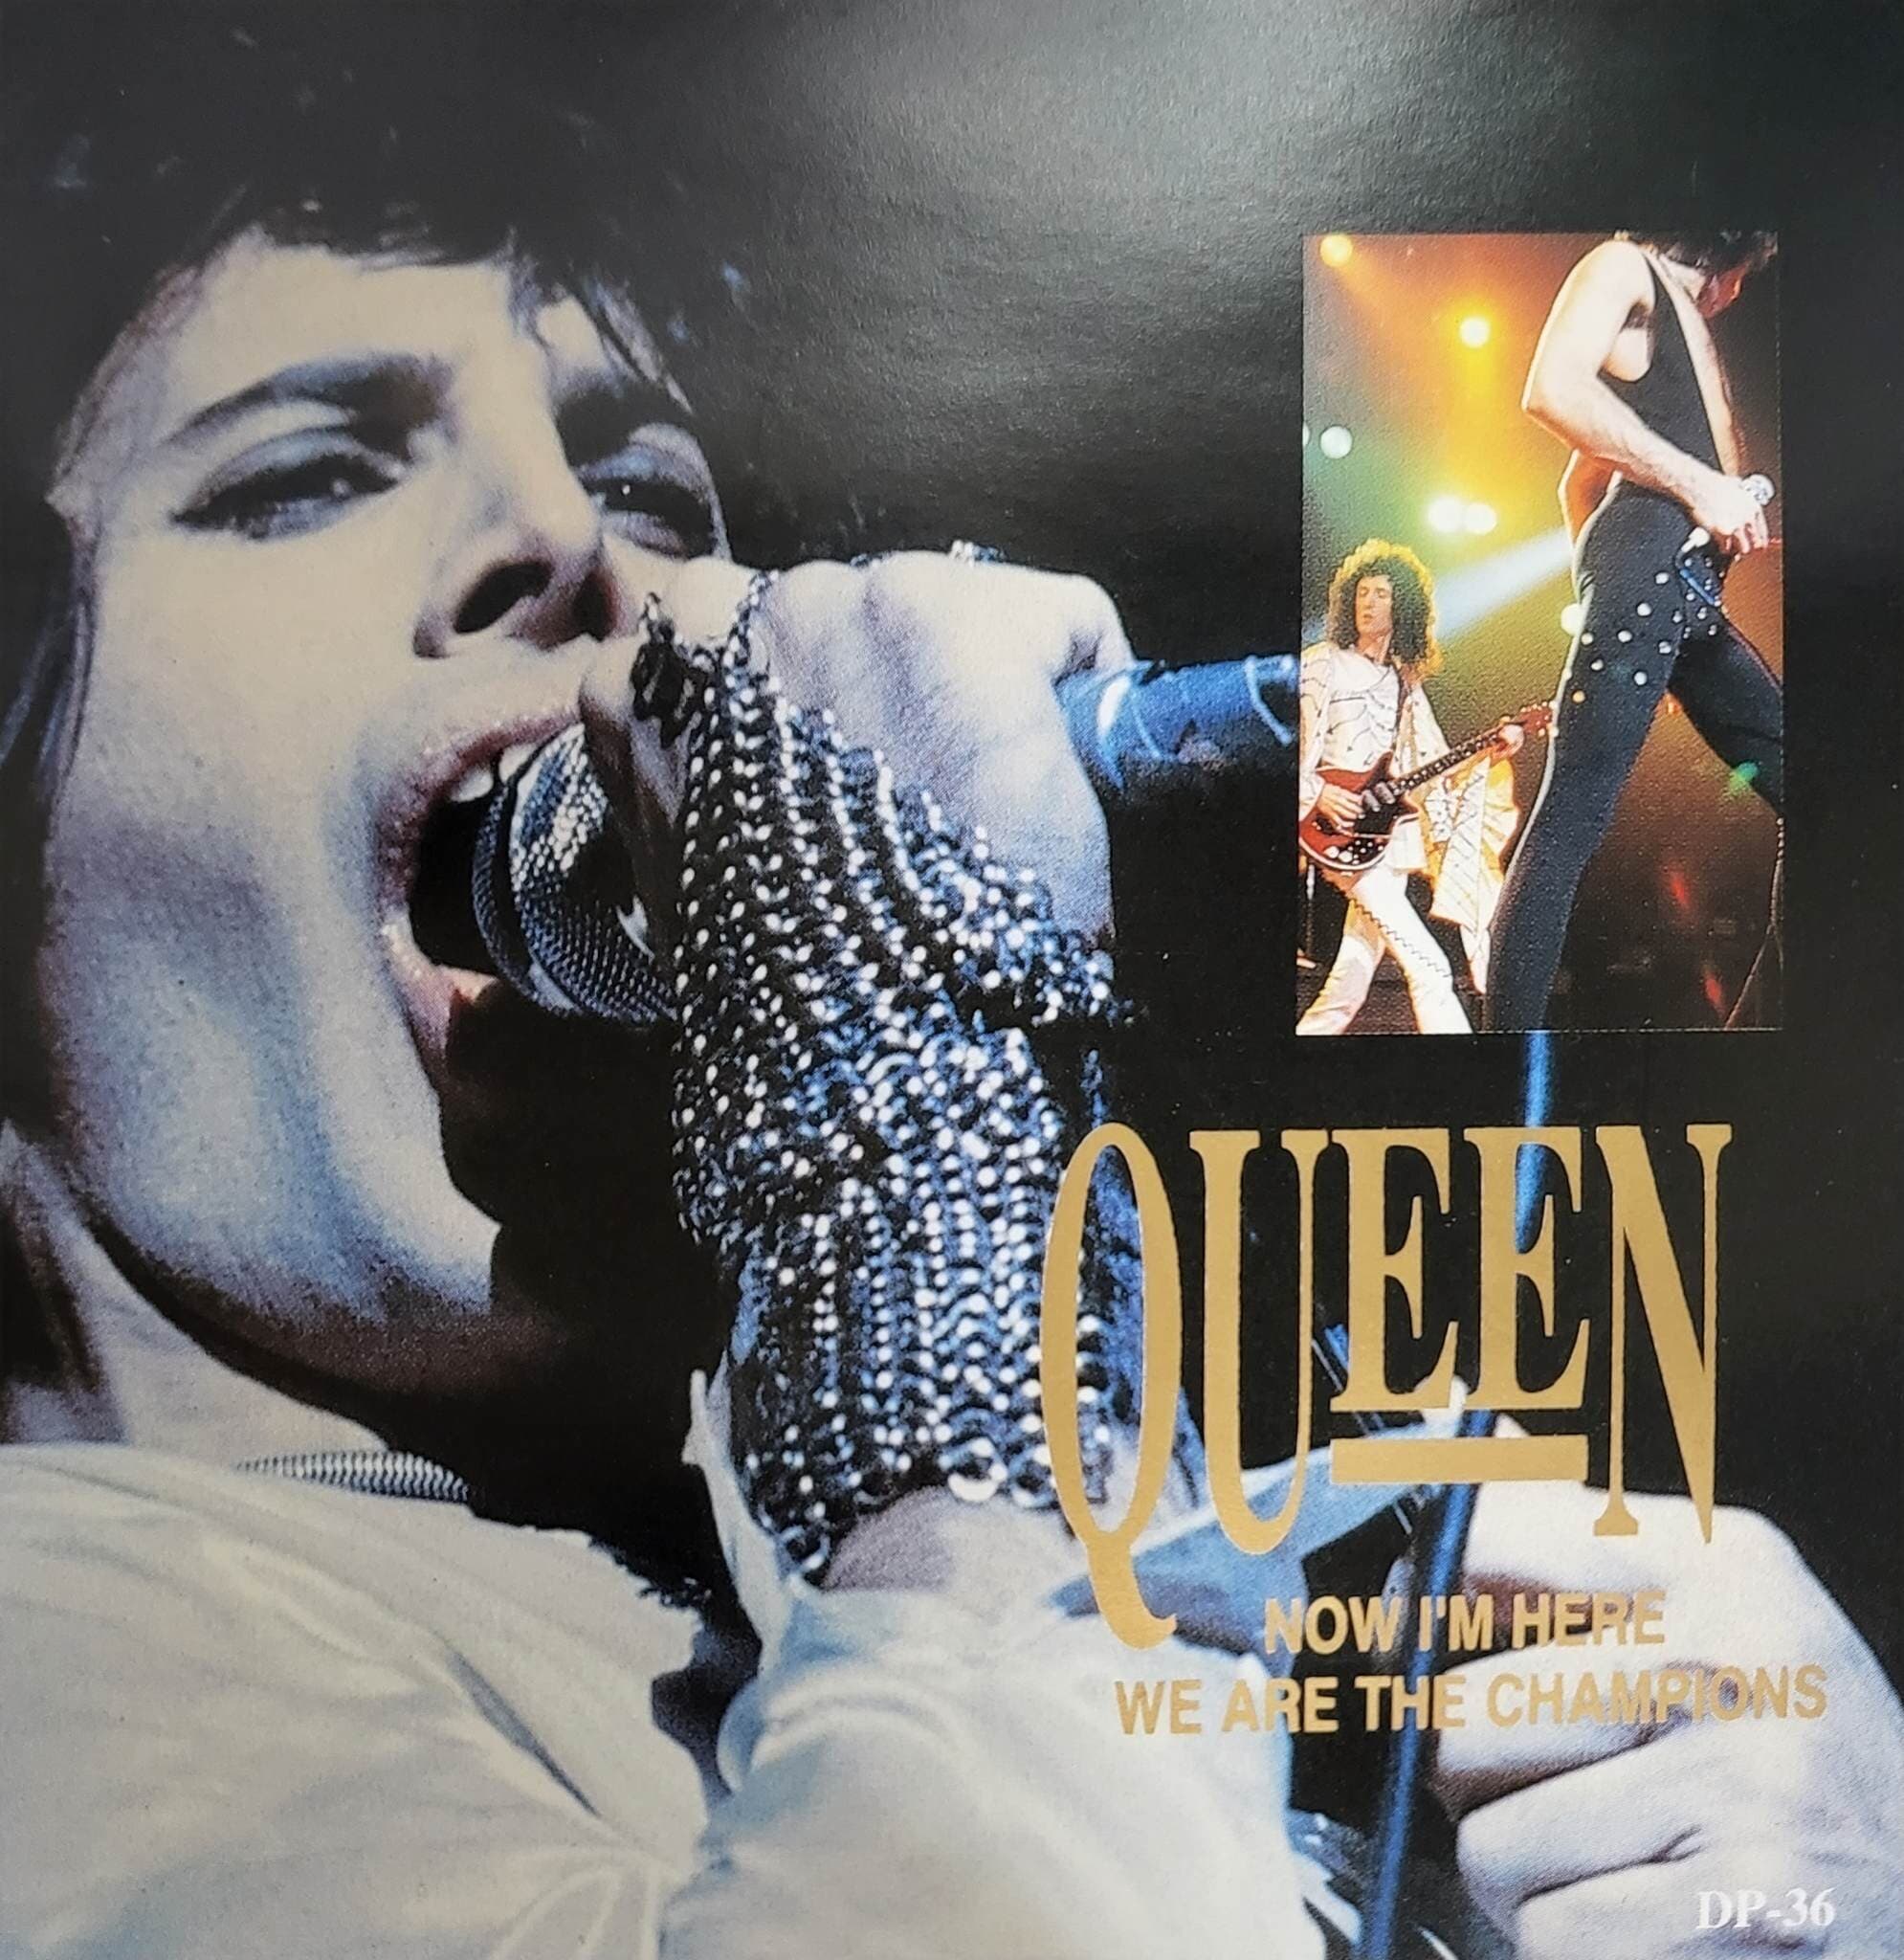 Queen (퀸) - Dynamic Live (오스트레일리아 제작,일본 포장 유통)